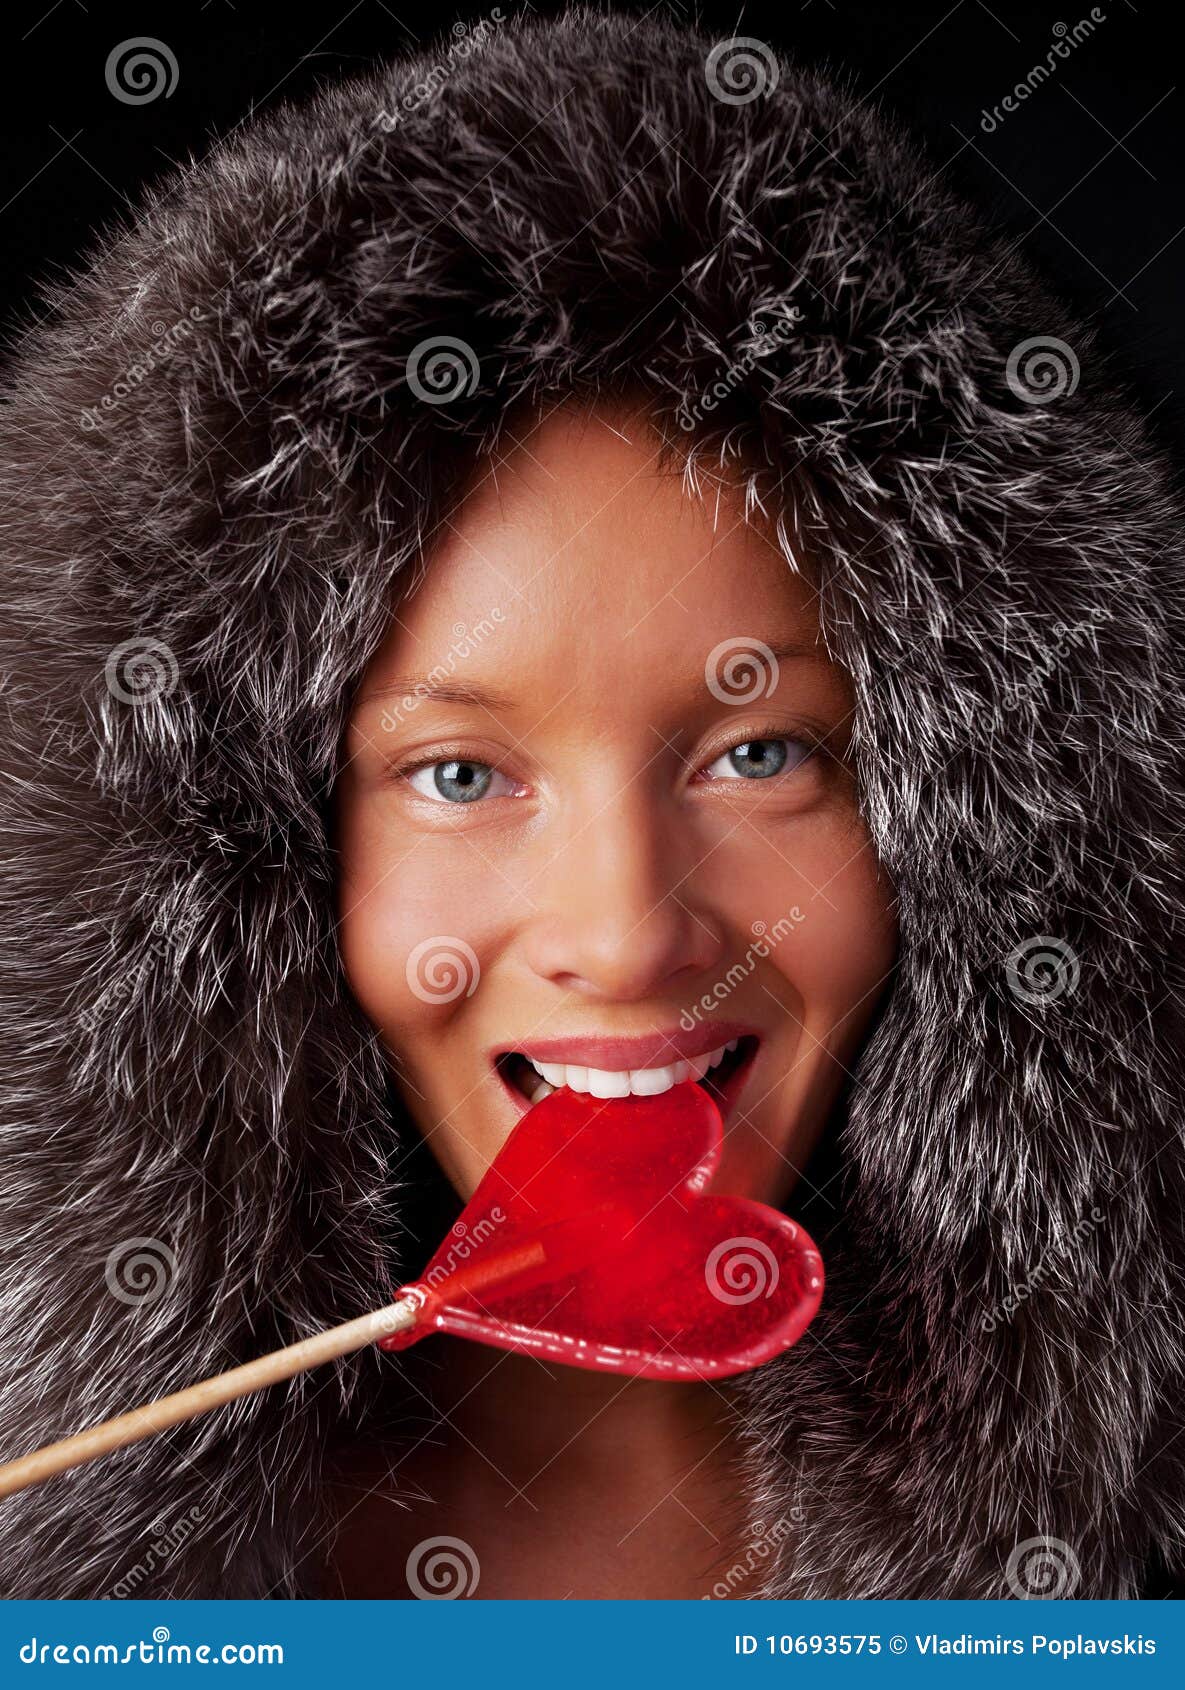 430 Woman Sucking Lollipop Stock Photos picture pic